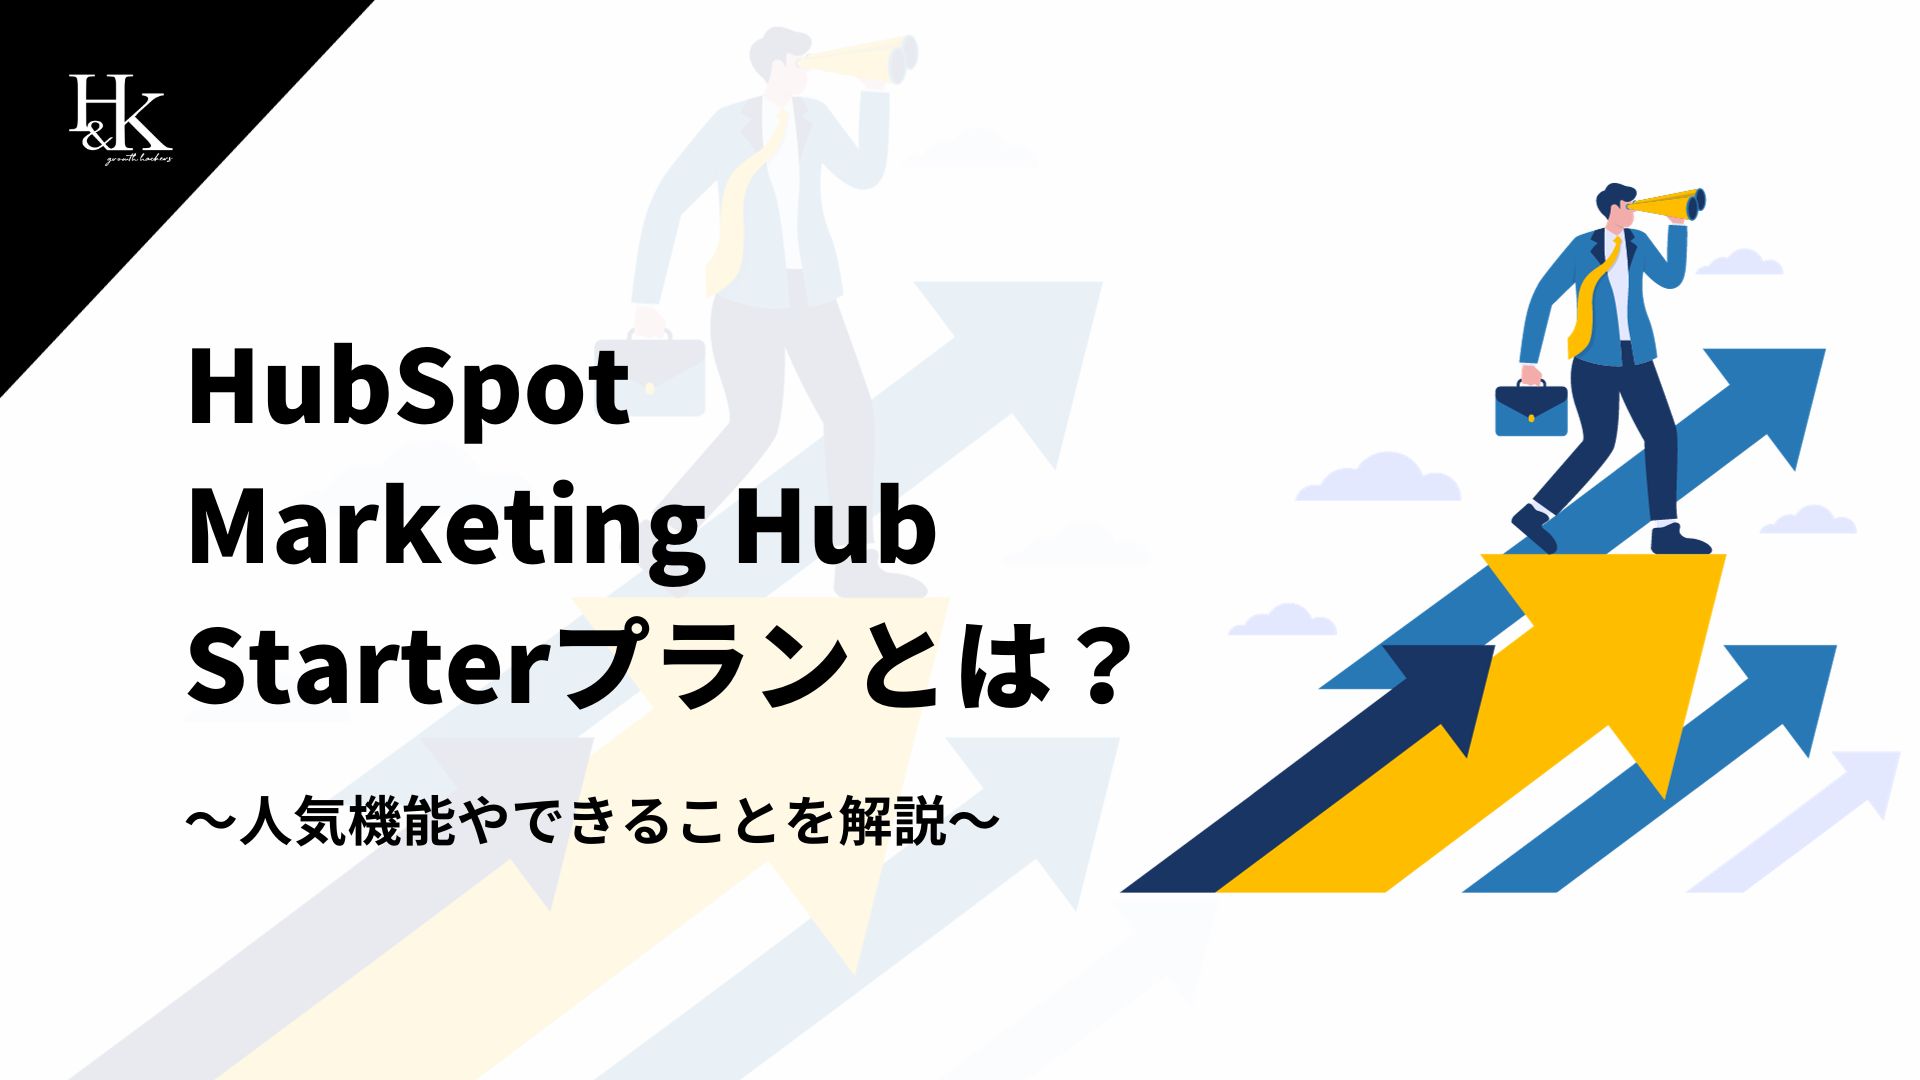 HubSpot Marketing Hub Starterプランとは？～人気機能やできることを解説～